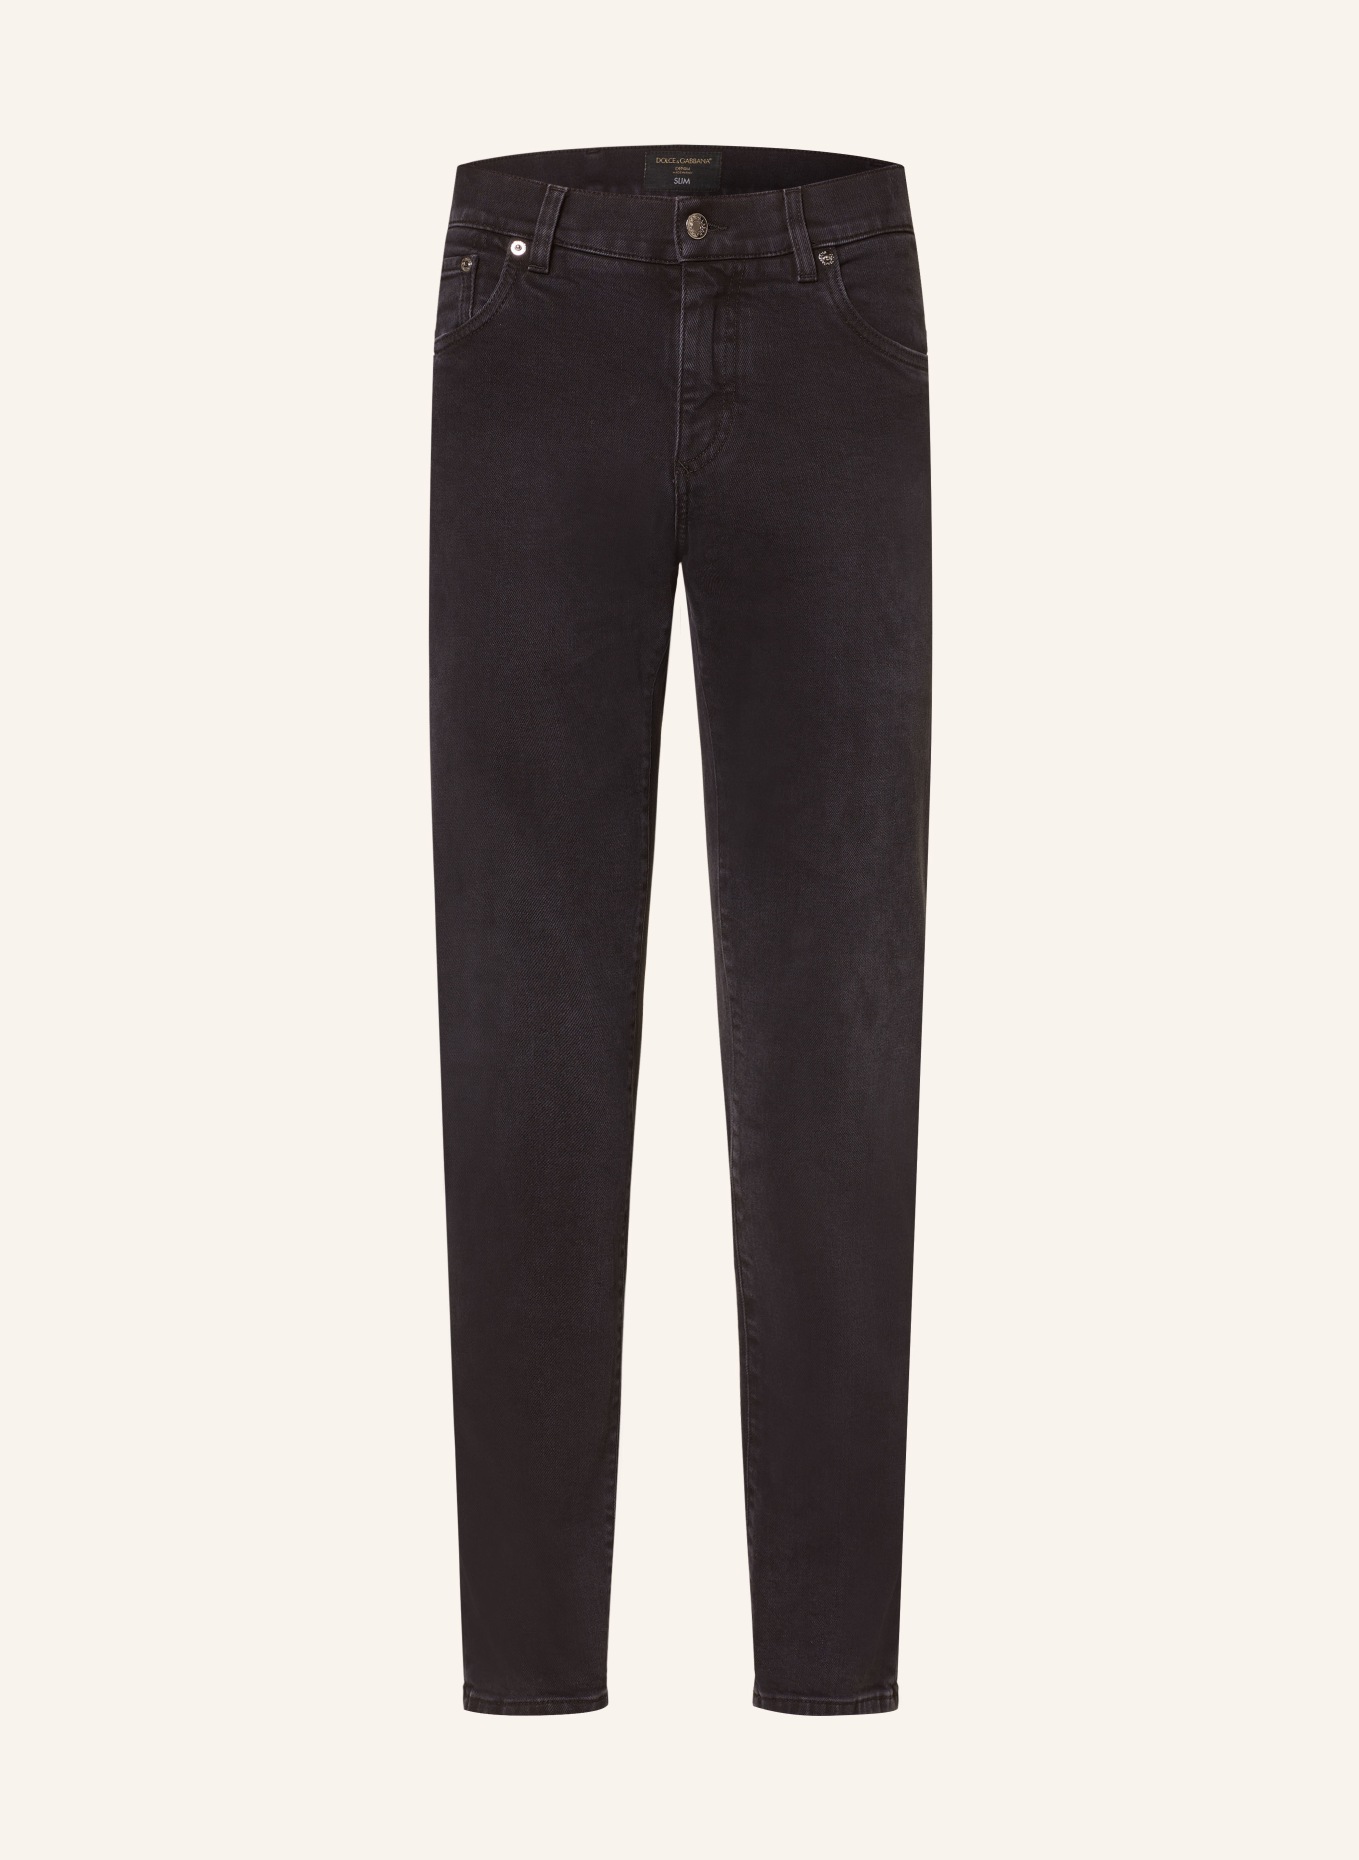 DOLCE & GABBANA Jeans Slim Fit, Farbe: S9001 COMBINED COLOUR (Bild 1)